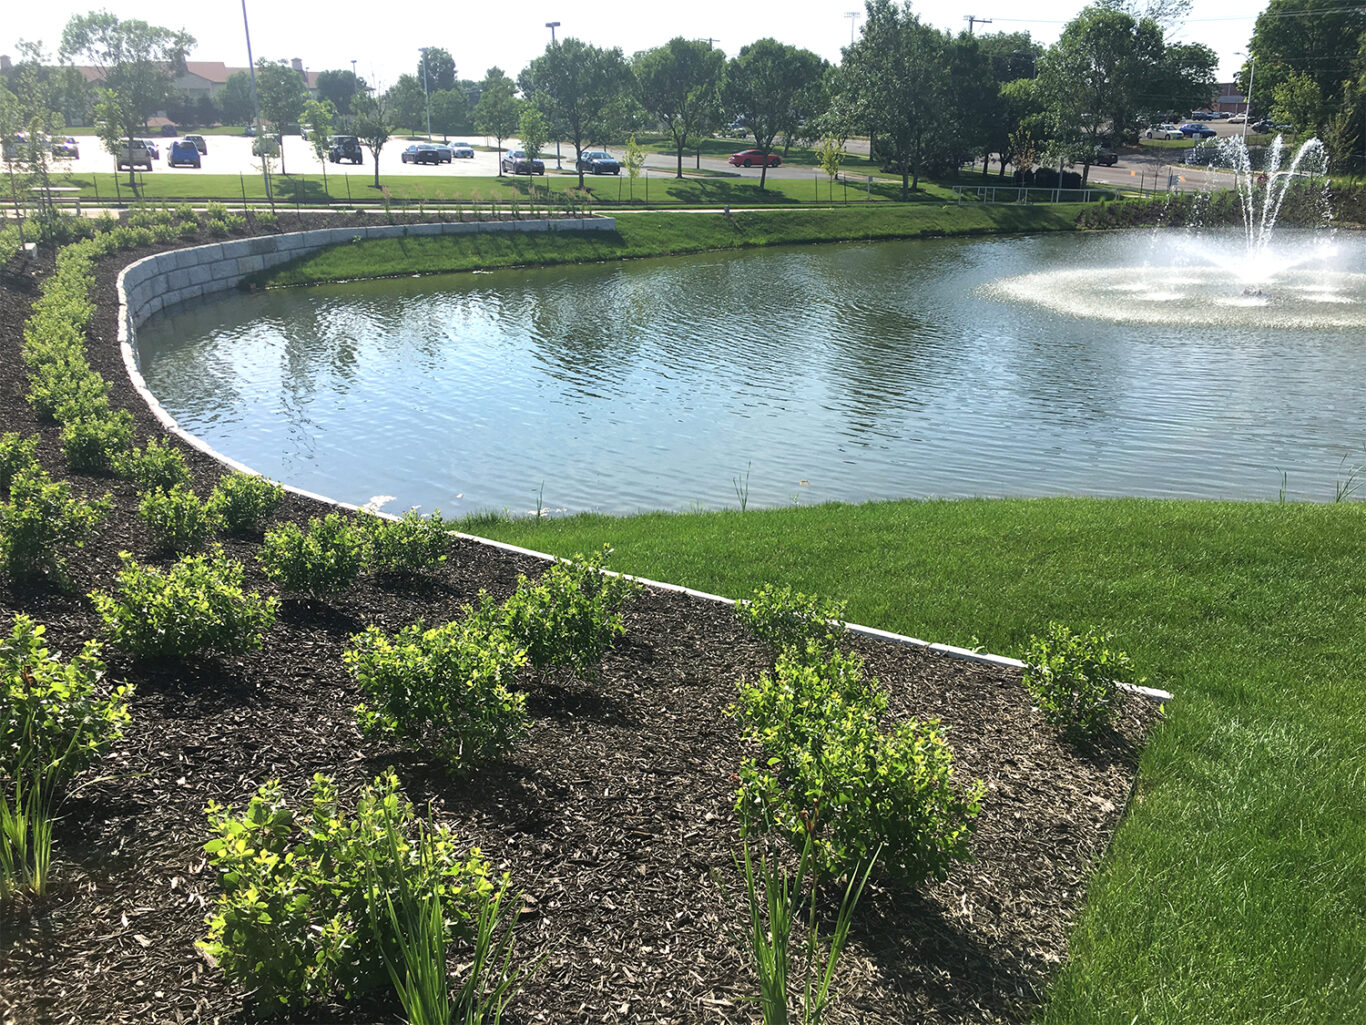 Overland Park Kansas Campus shows Retention pond health